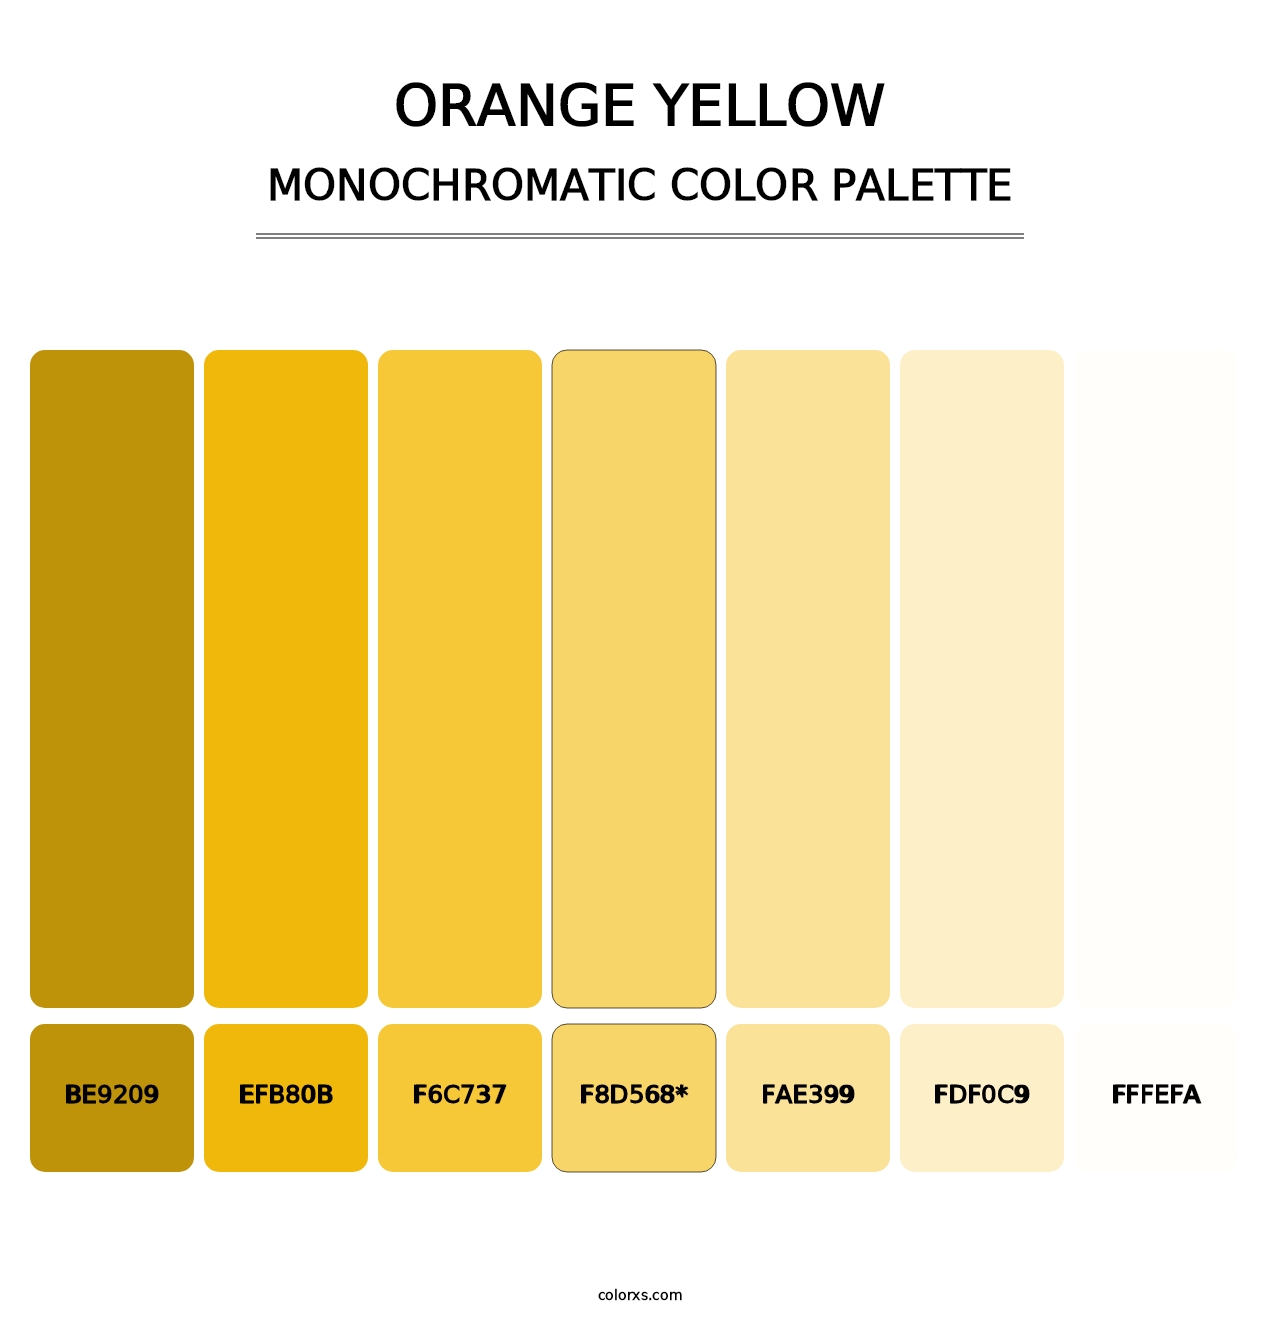 Orange Yellow - Monochromatic Color Palette